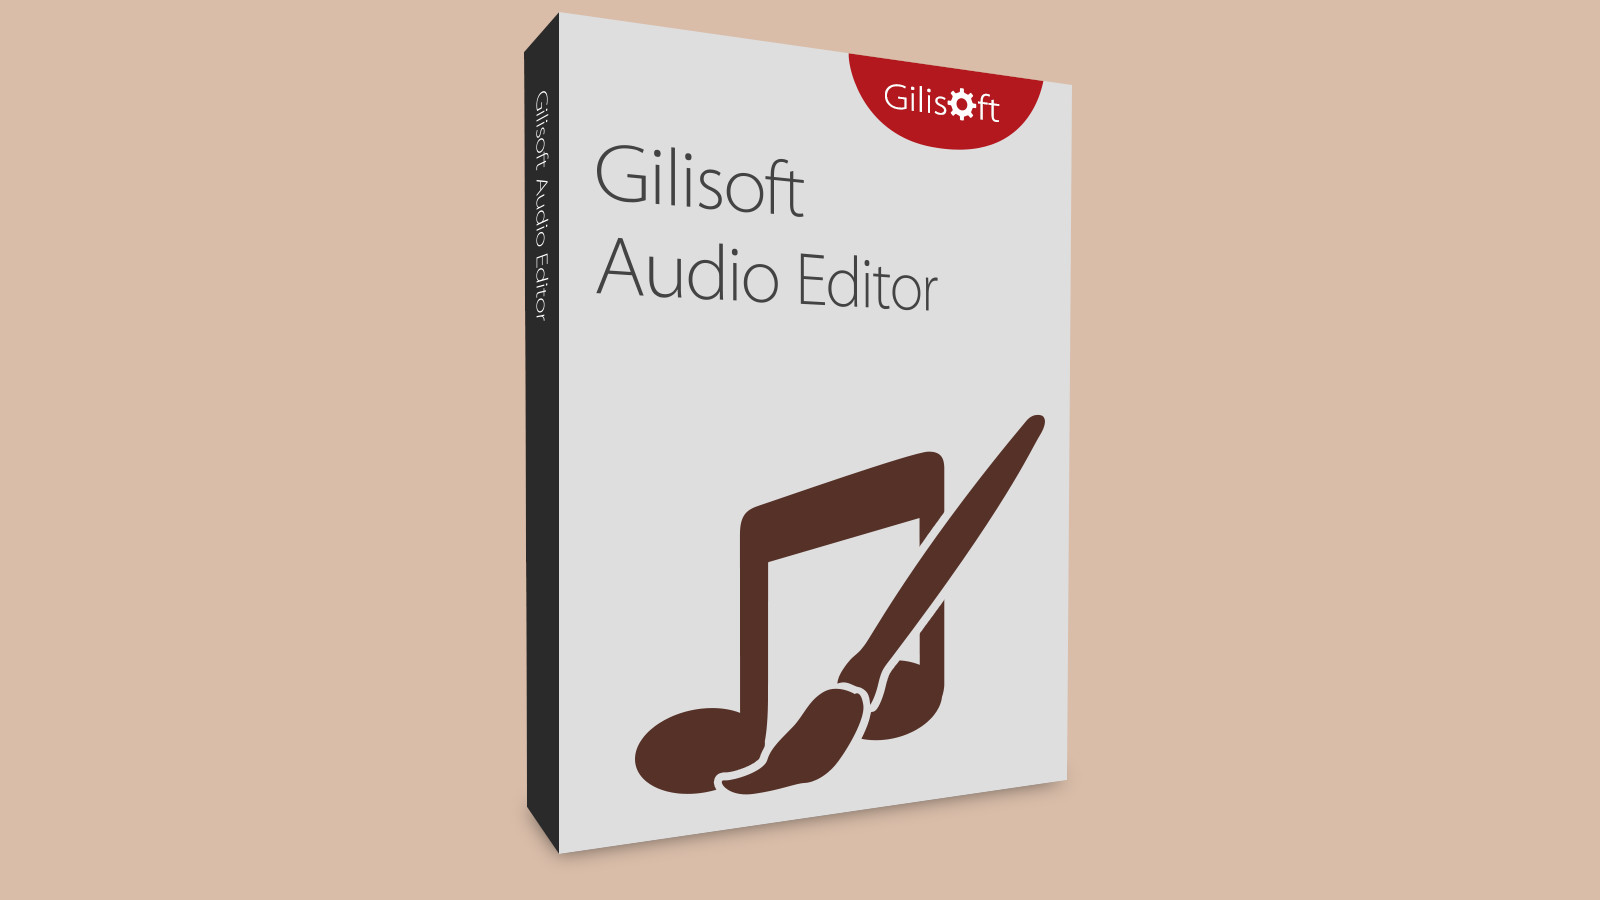 Gilisoft Audio Editor CD Key, $16.5